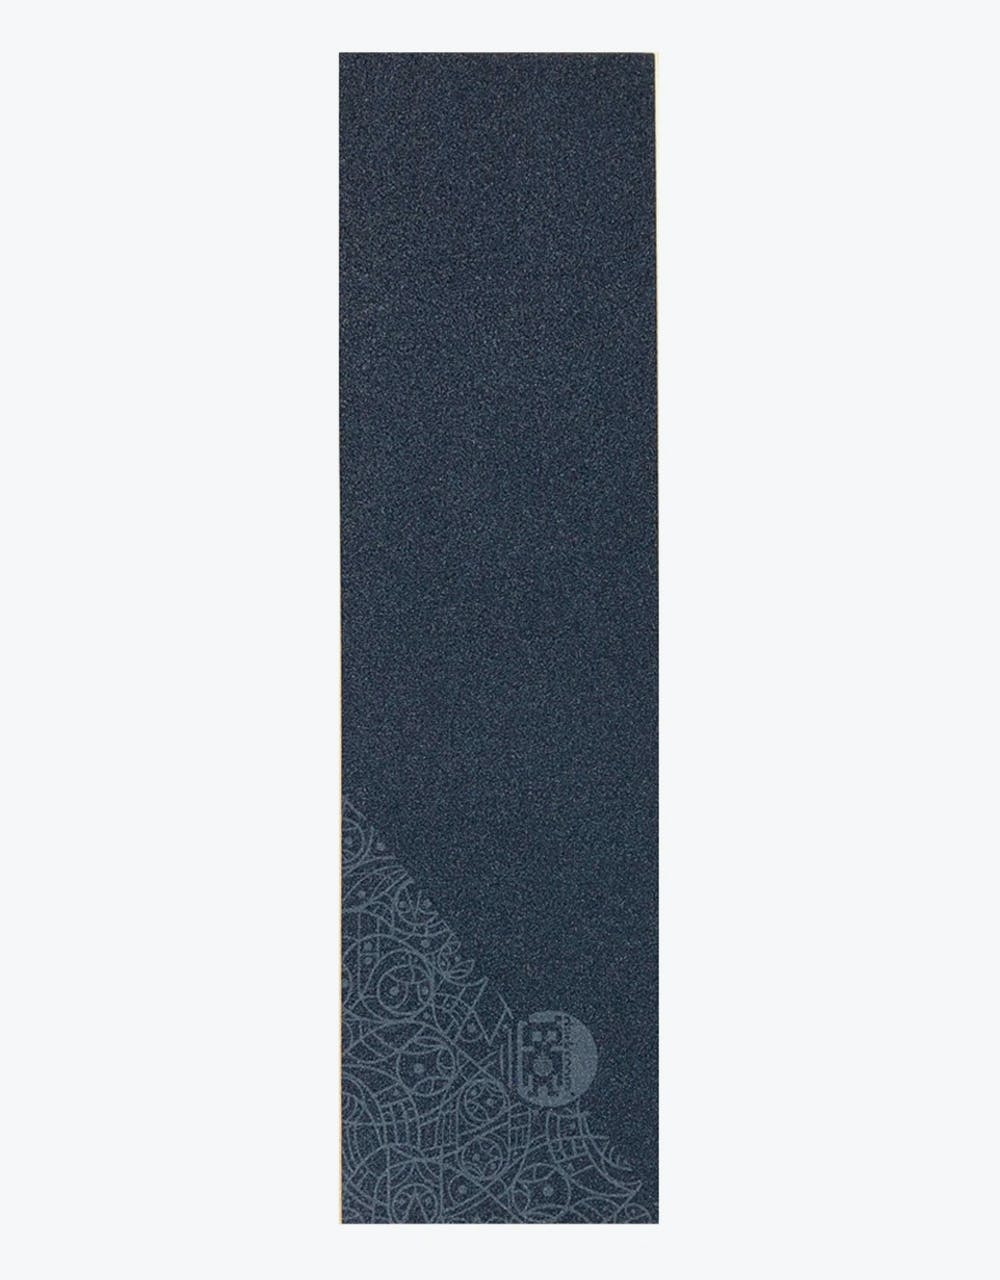 Darkroom Dark Sliver Tonal 9" Grip Tape Sheet